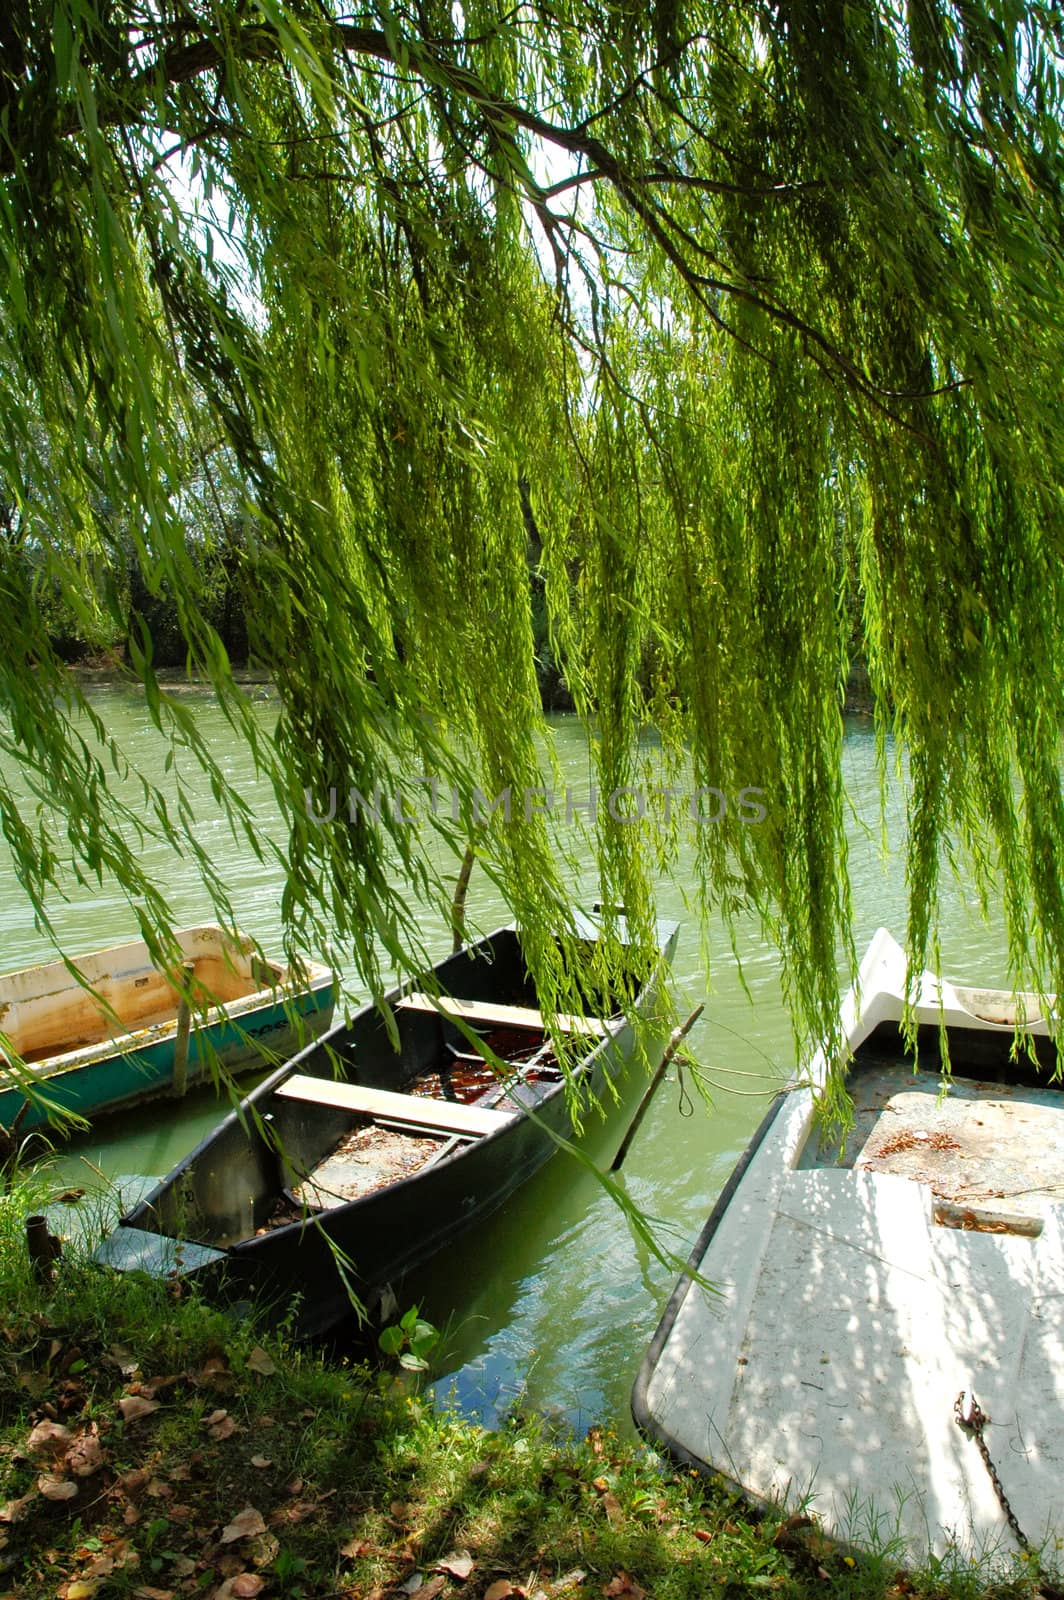 Anchored rowboat under a willow at an Italian lake